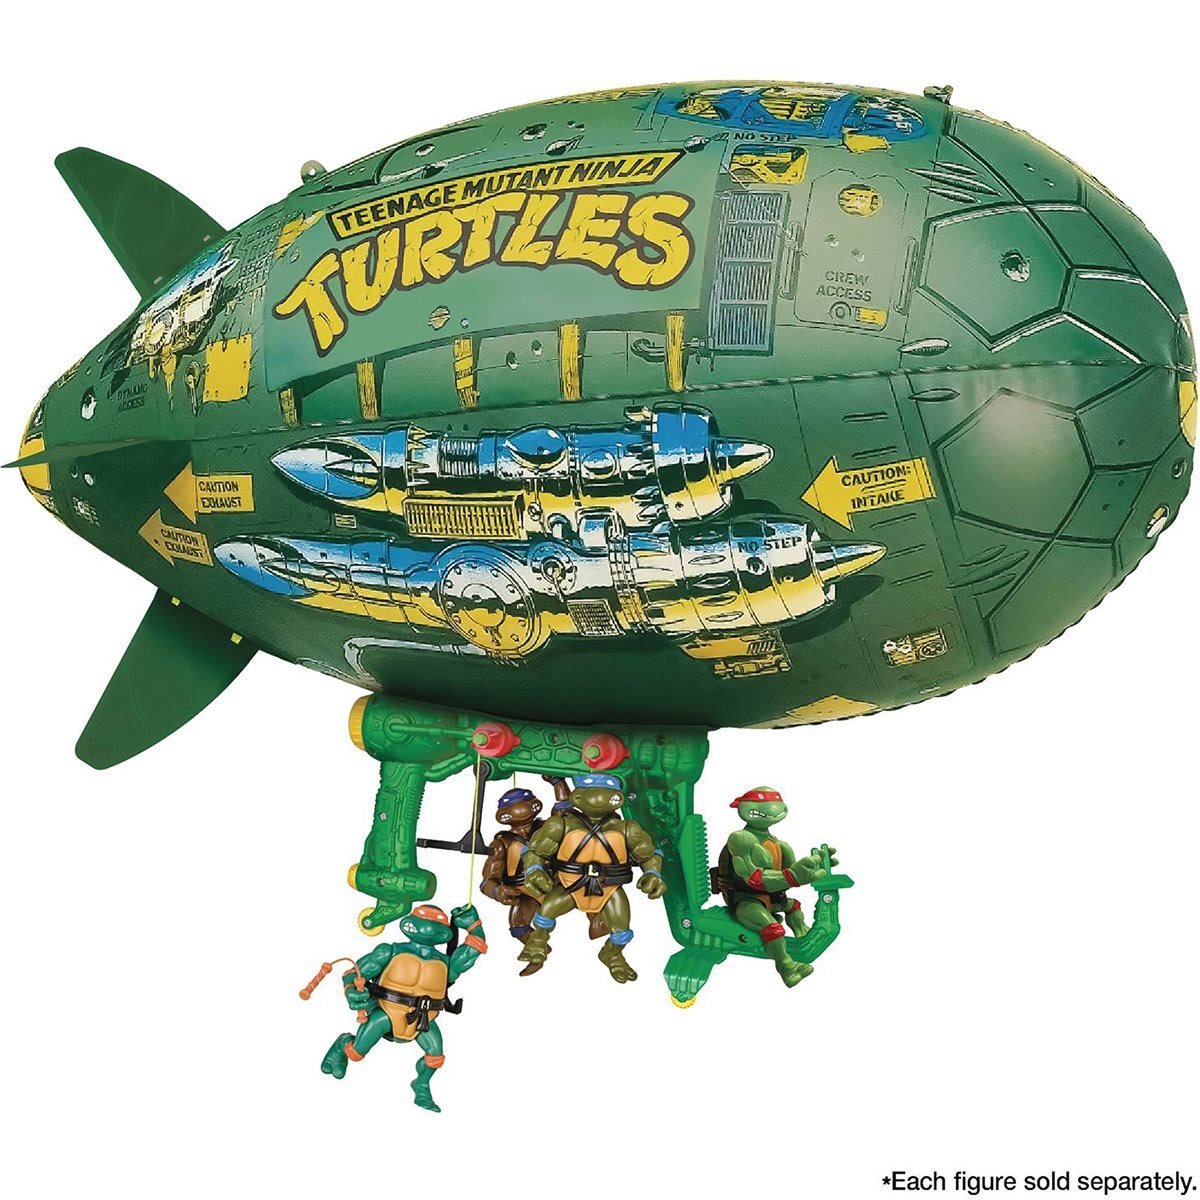 Playmates『《忍者龜》經典烏龜飛船（Turtle Blimp Vehicle）』載具模型，烏龜英雄們的經典載具再度回歸！